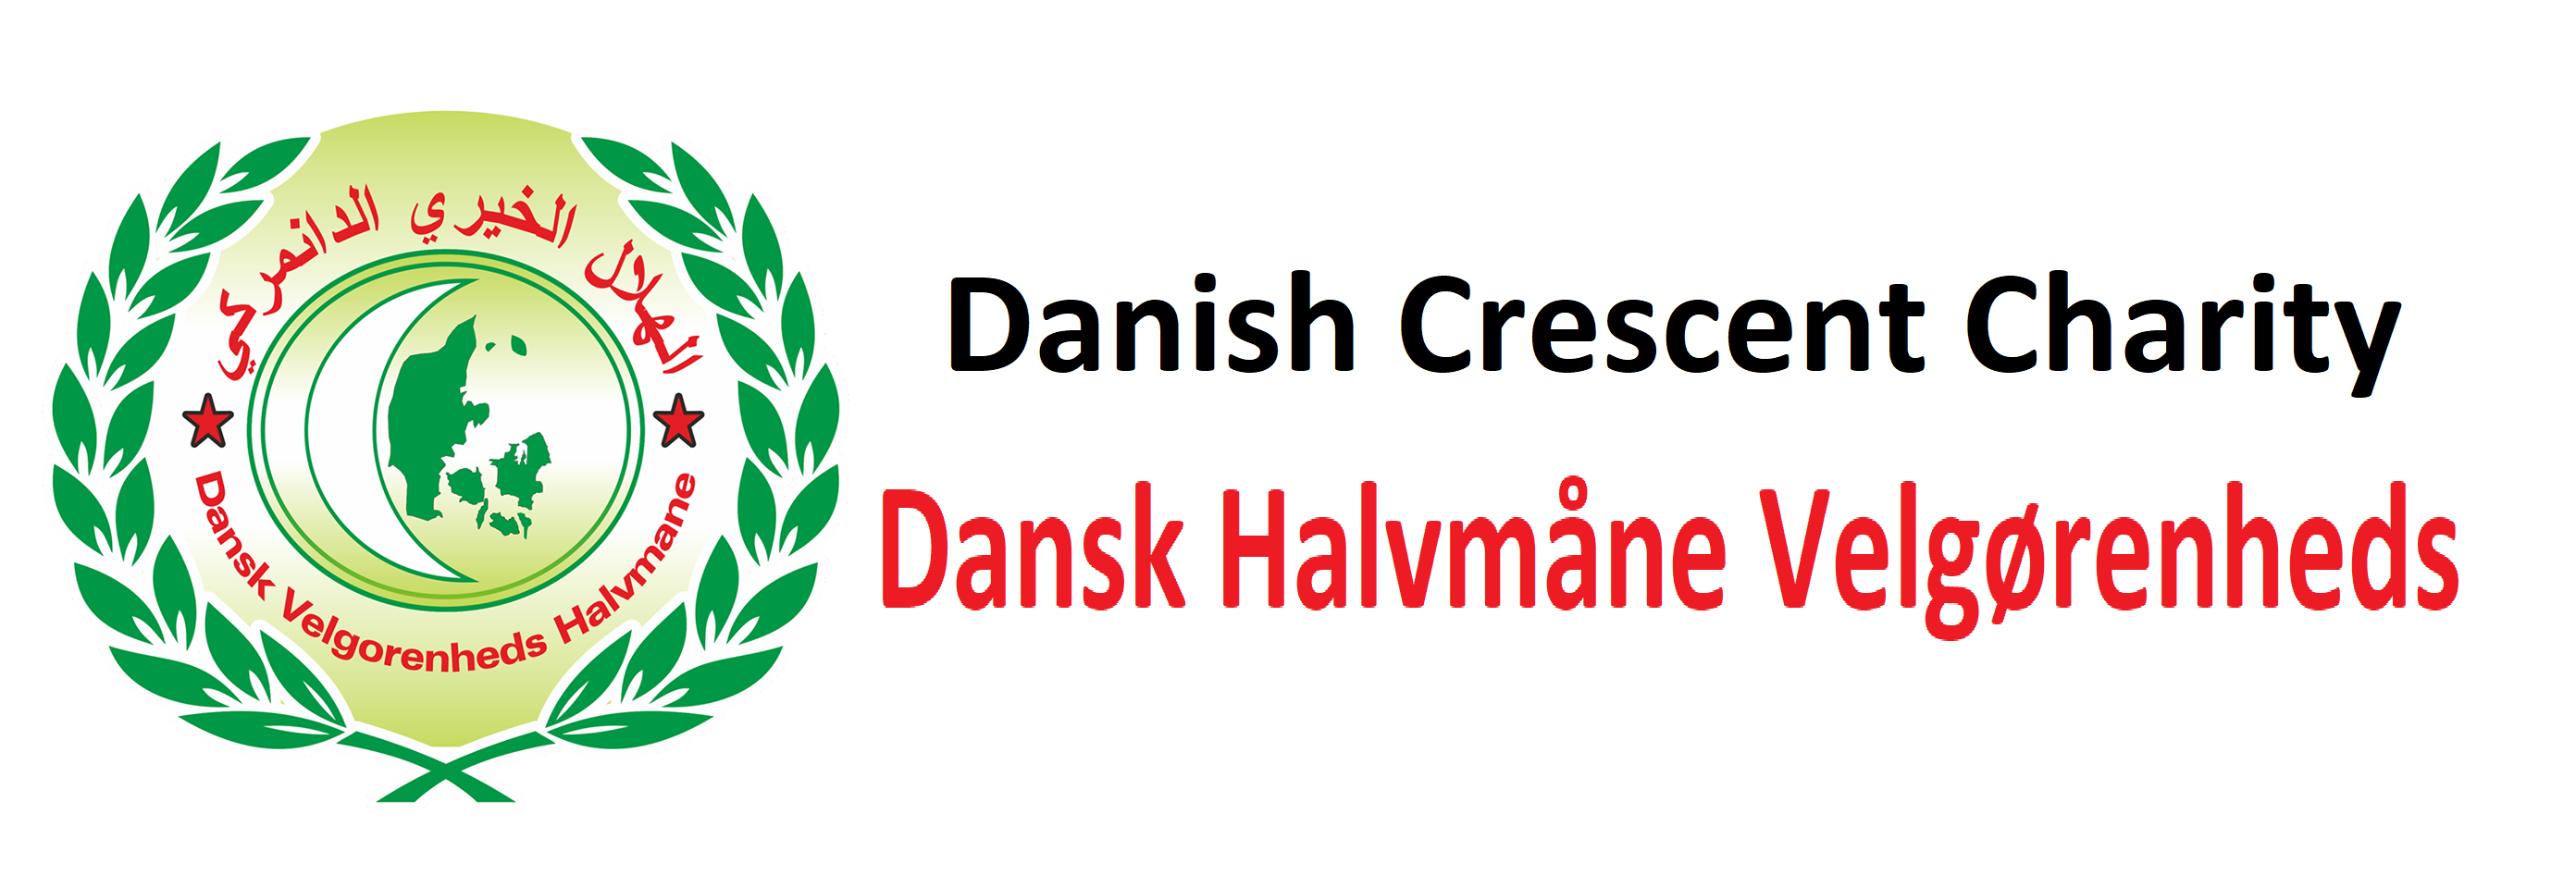 Danish Crescent Charity logo